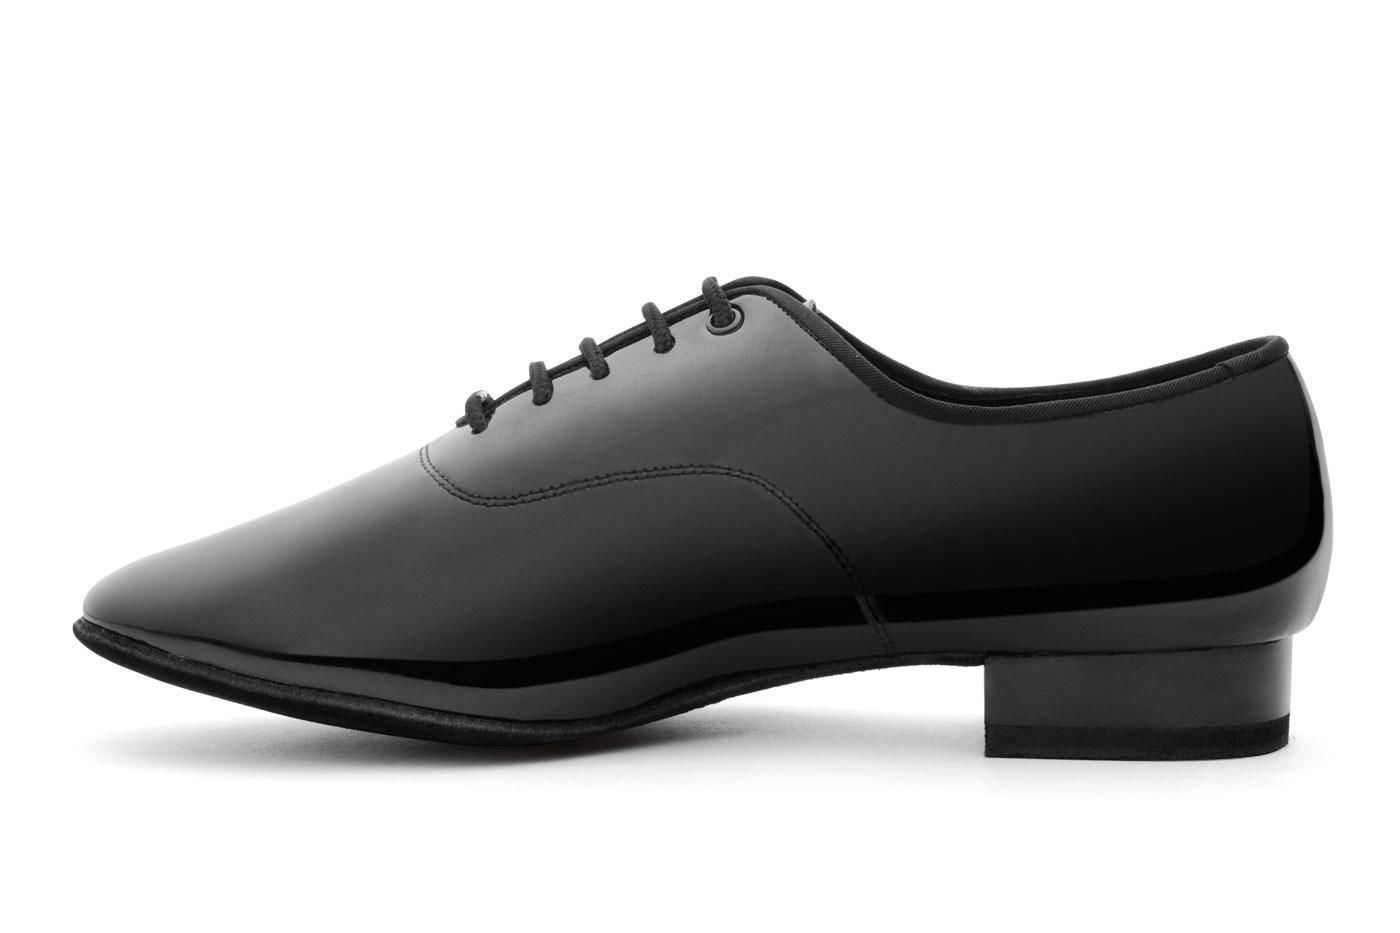 BDDANCE ballroom shoes Men's standard dancing shoes patent leather 302